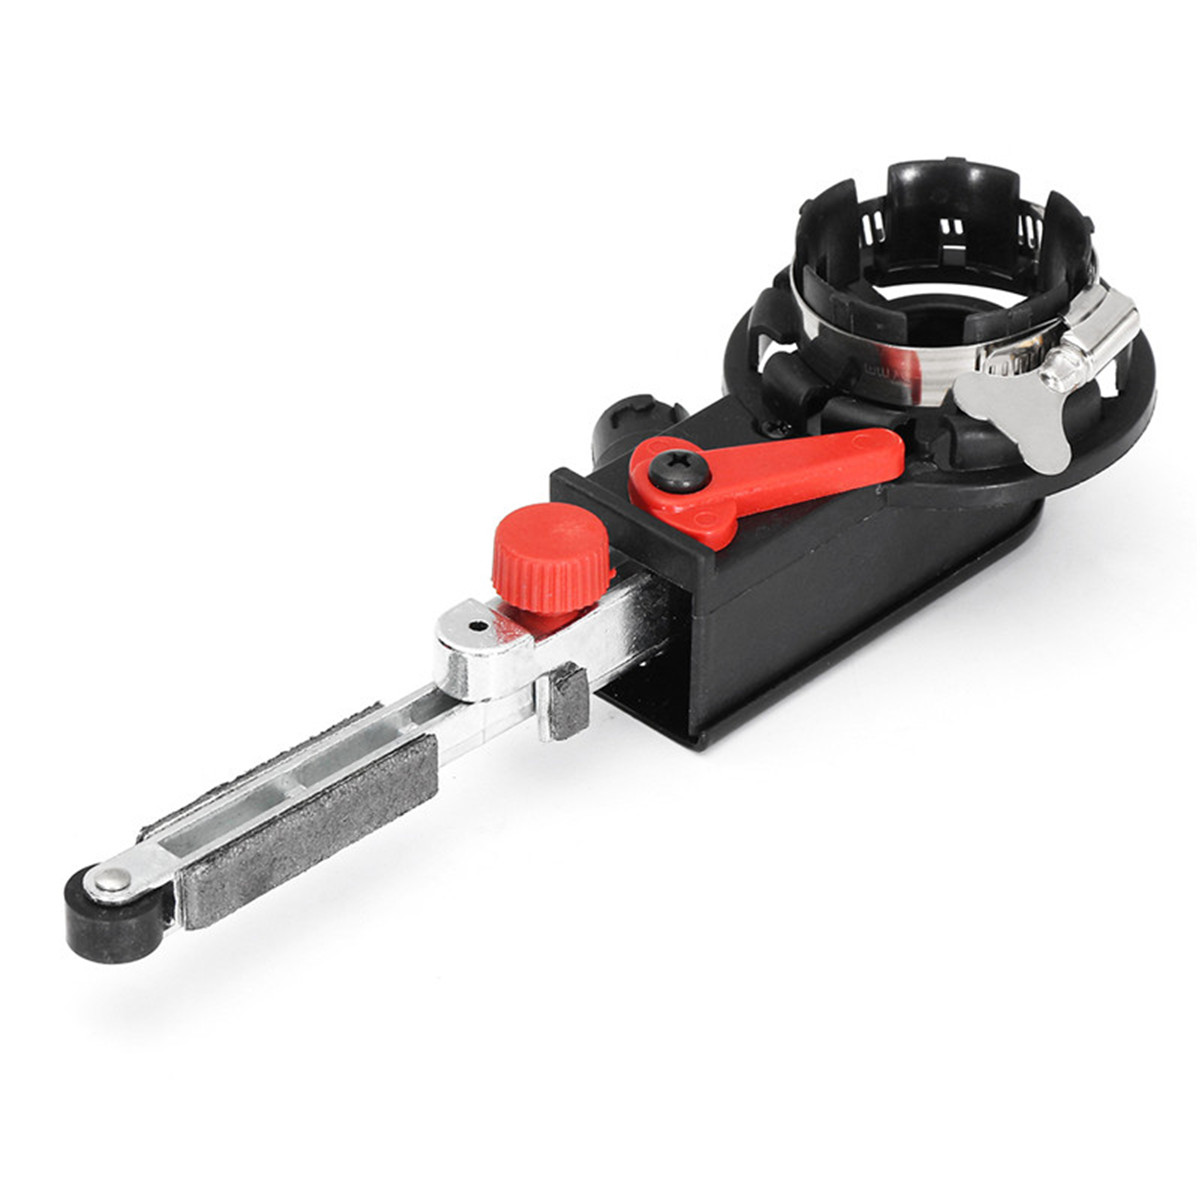 Drillpro-Sanding-Belt-Adapter-Changed-115125mm-Angle-Grinder-into-Sander-Sanding-Machine-1259960-8